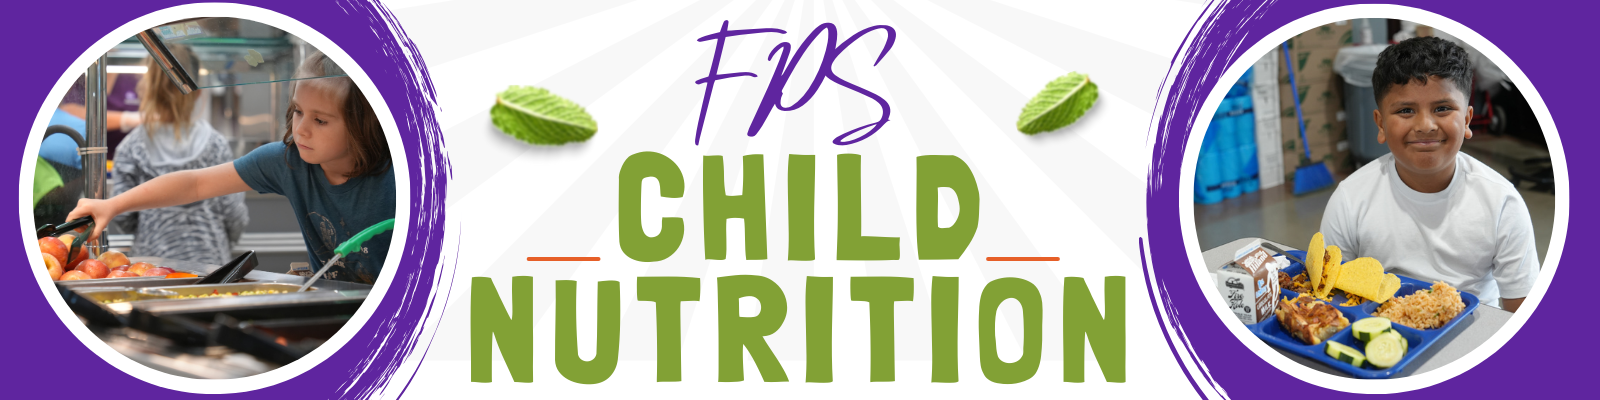 FPS Child Nutrition